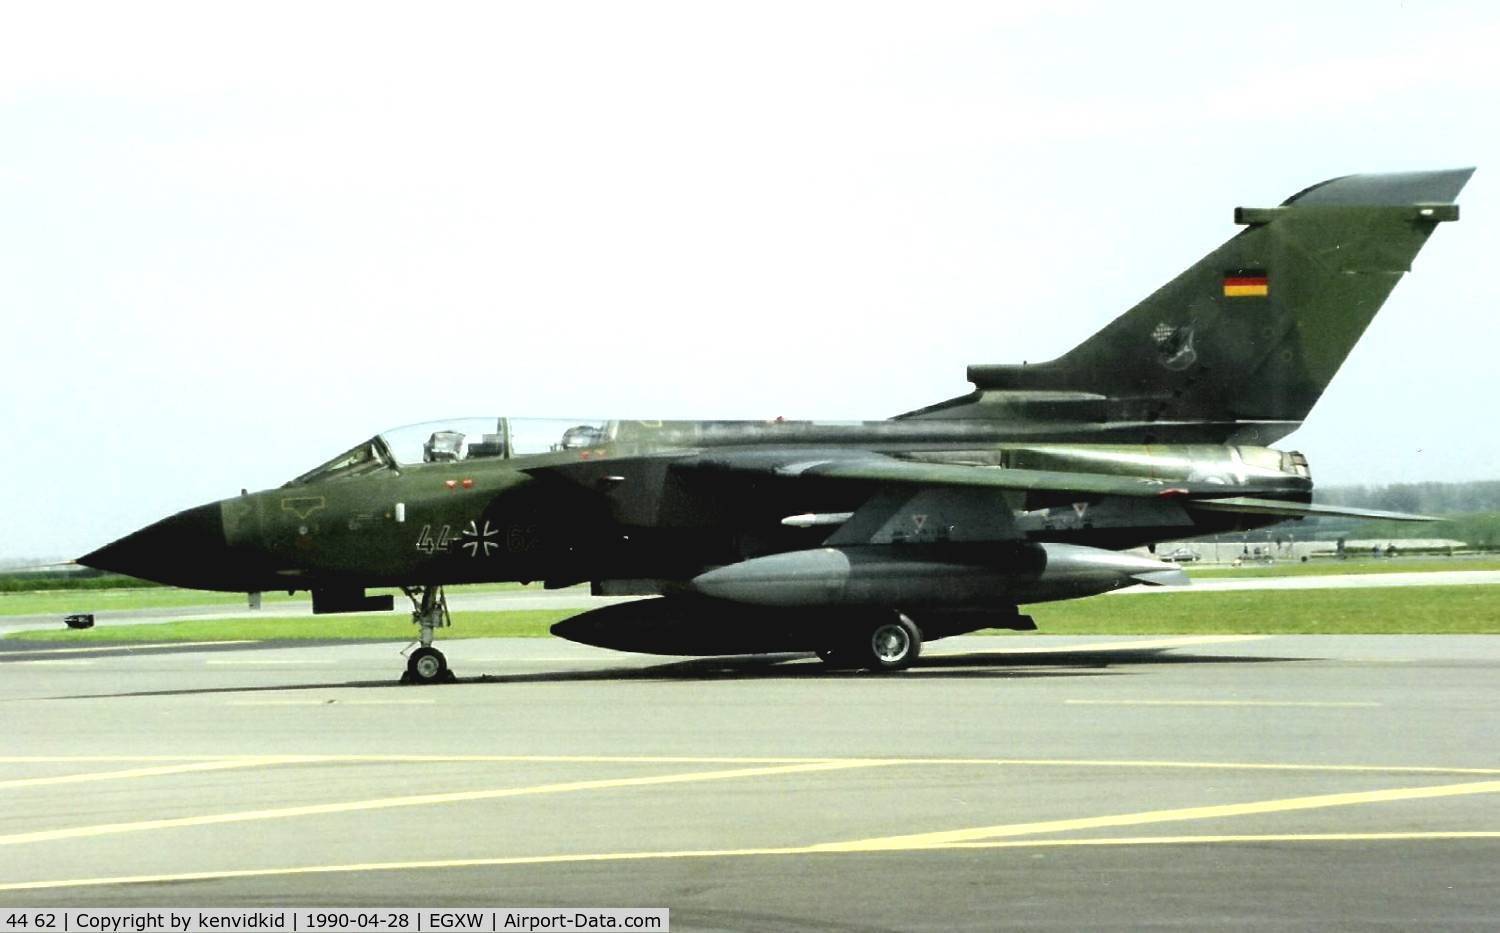 44 62, Panavia Tornado IDS C/N 410/GS119/4162, At the Waddington 1990 photocall.